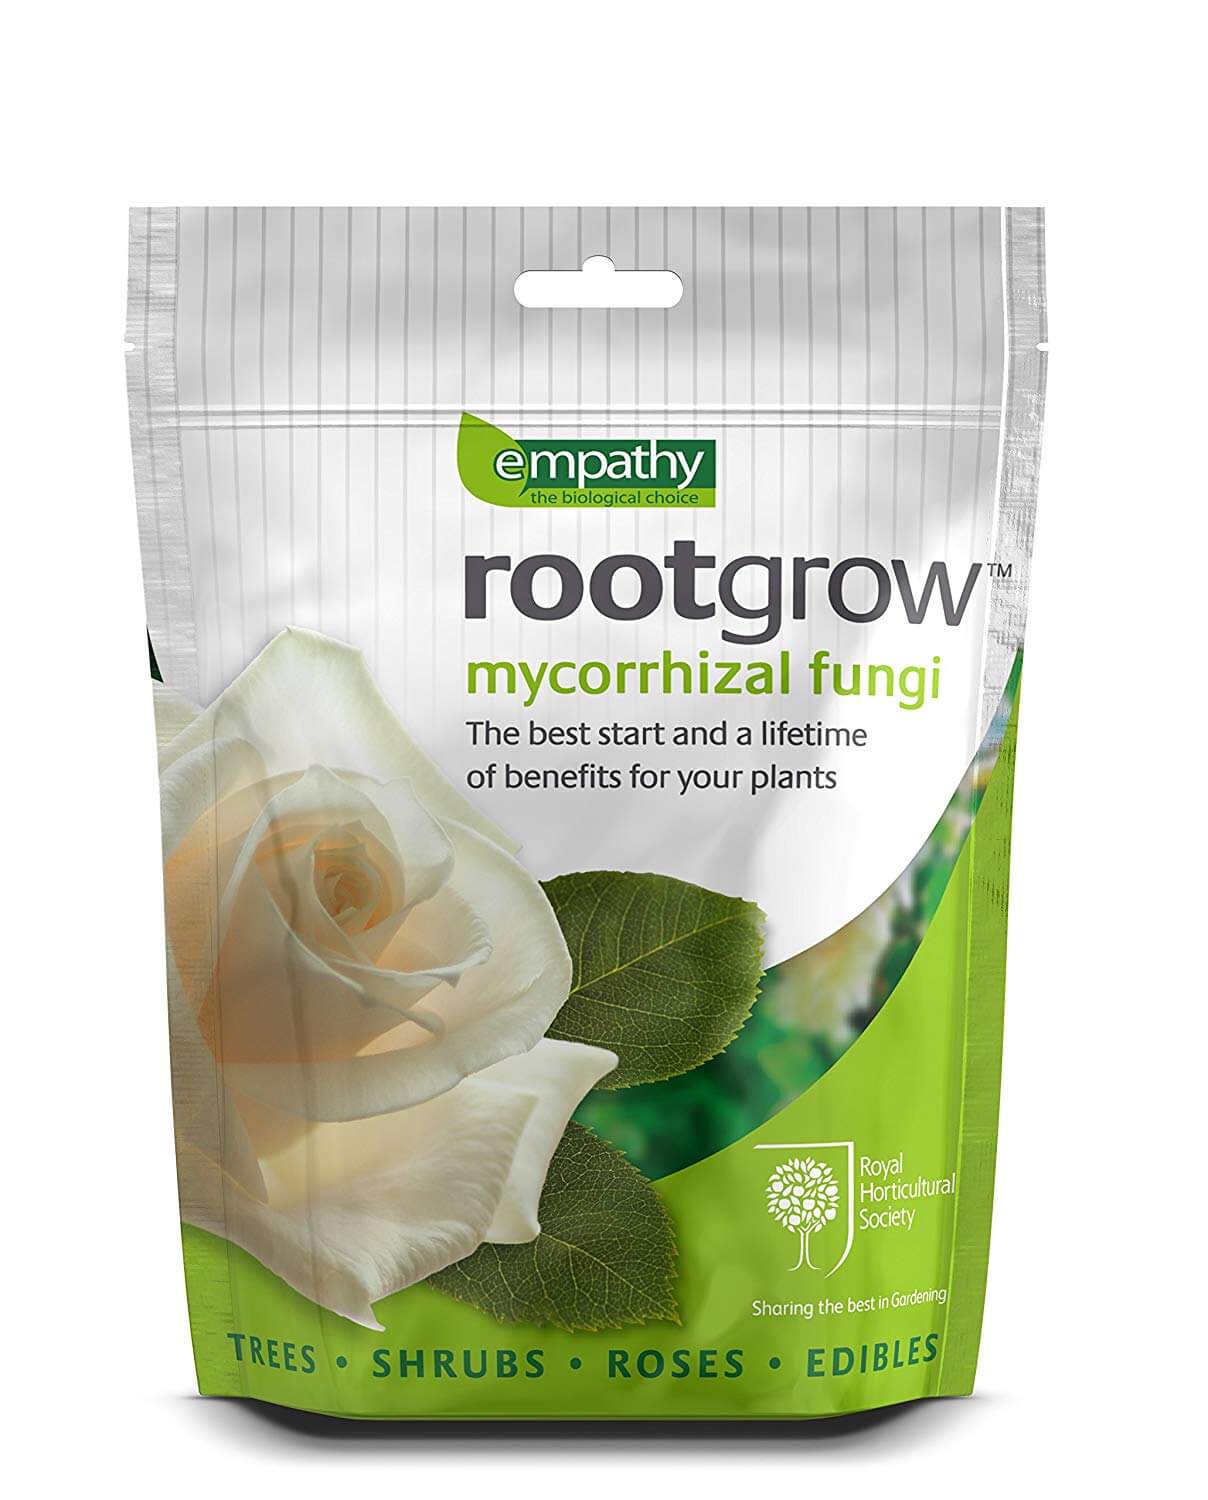 Rootgrow Mycorrhizal Fungi 150g Home, Office, Garden online marketplace